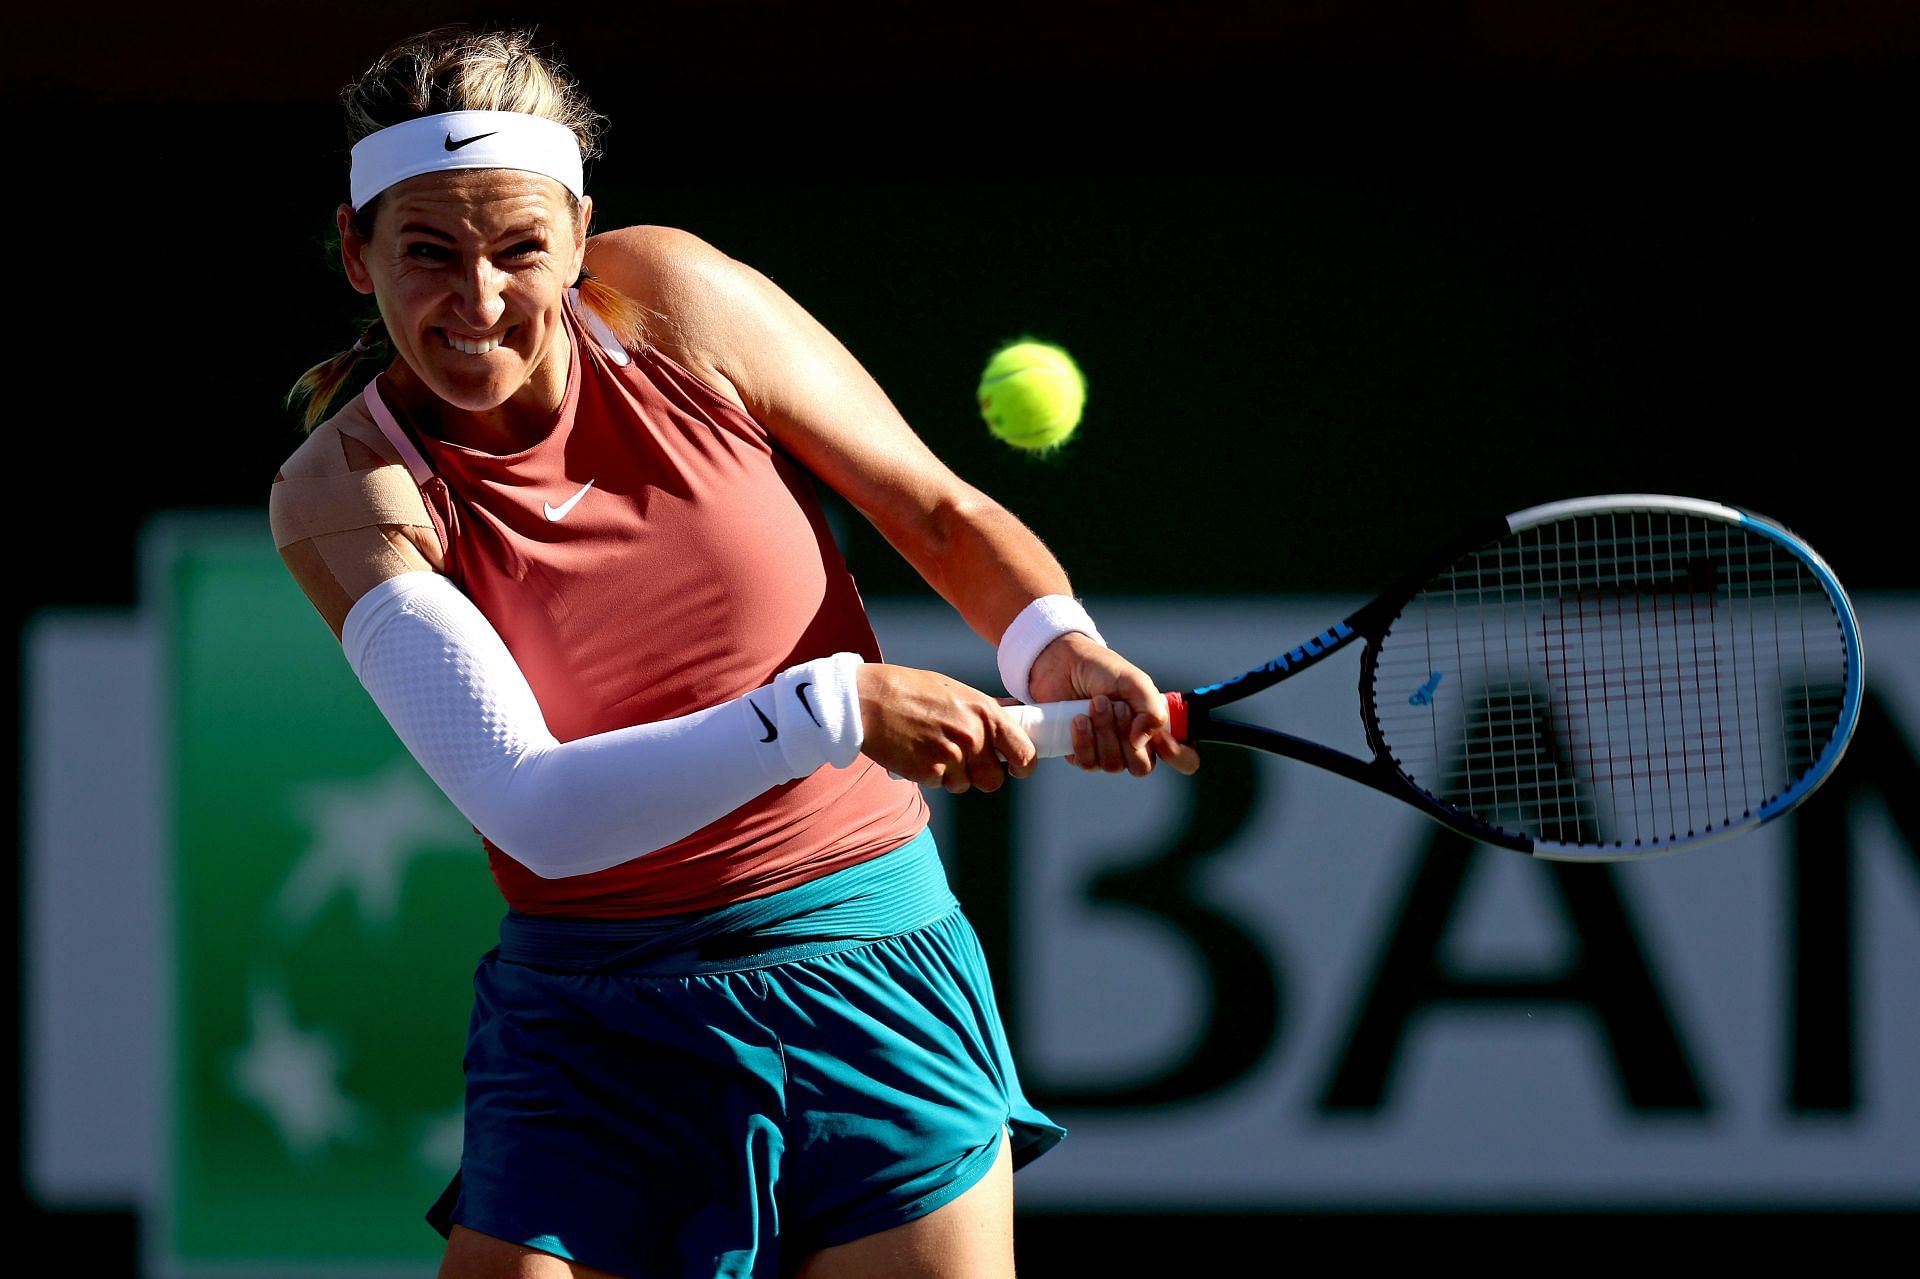 Victoria Azarenka will be keen to start the Miami Open strongly